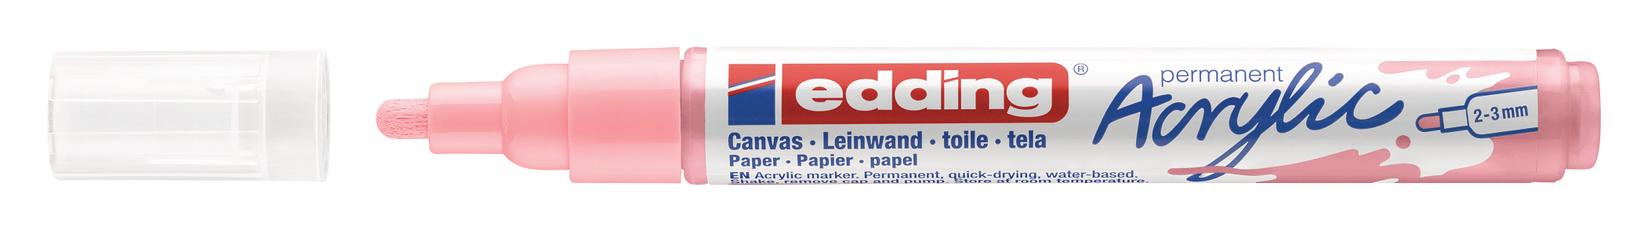 EDDING Akrilni marker medium 2-3mm obli vrh E-5100 svetloroze